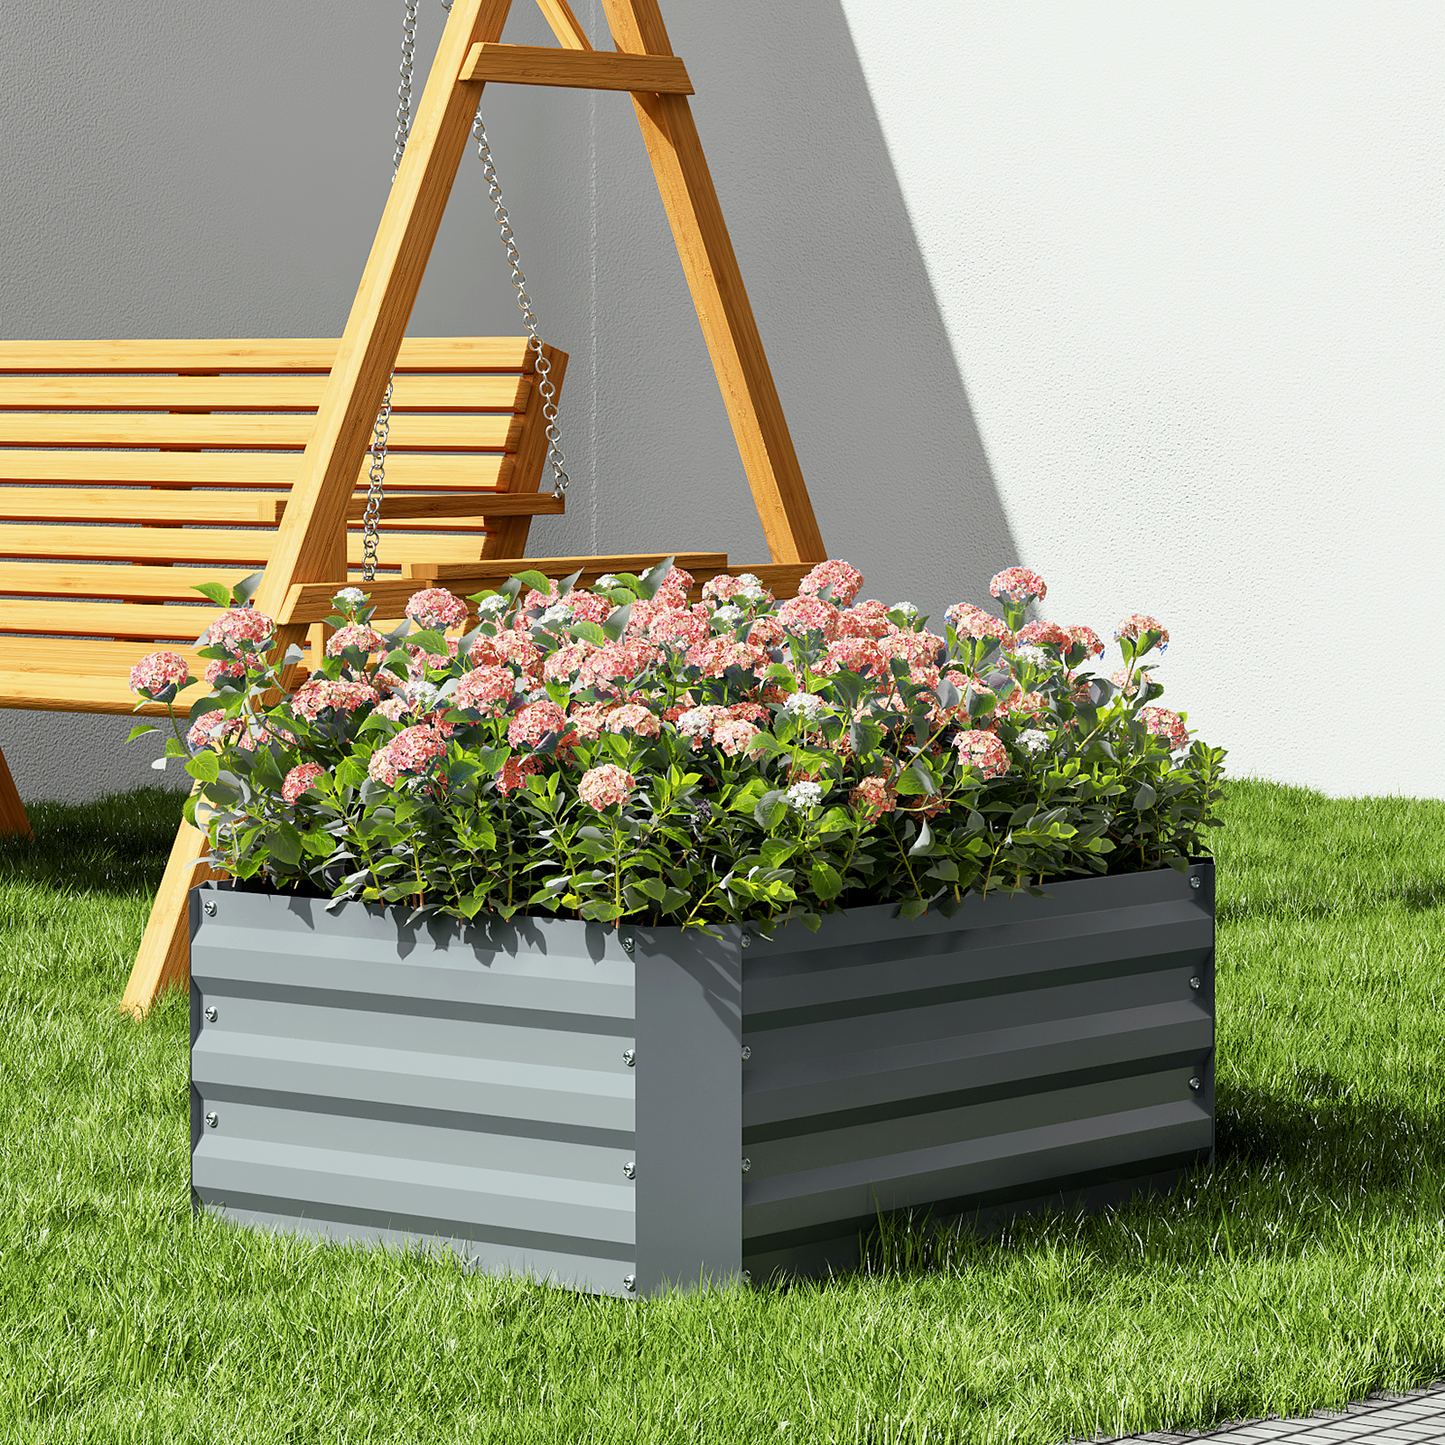 31.5"x24"x12" Patio Metal Raised Garden Bed Kit Vegetable Flower Planter Box